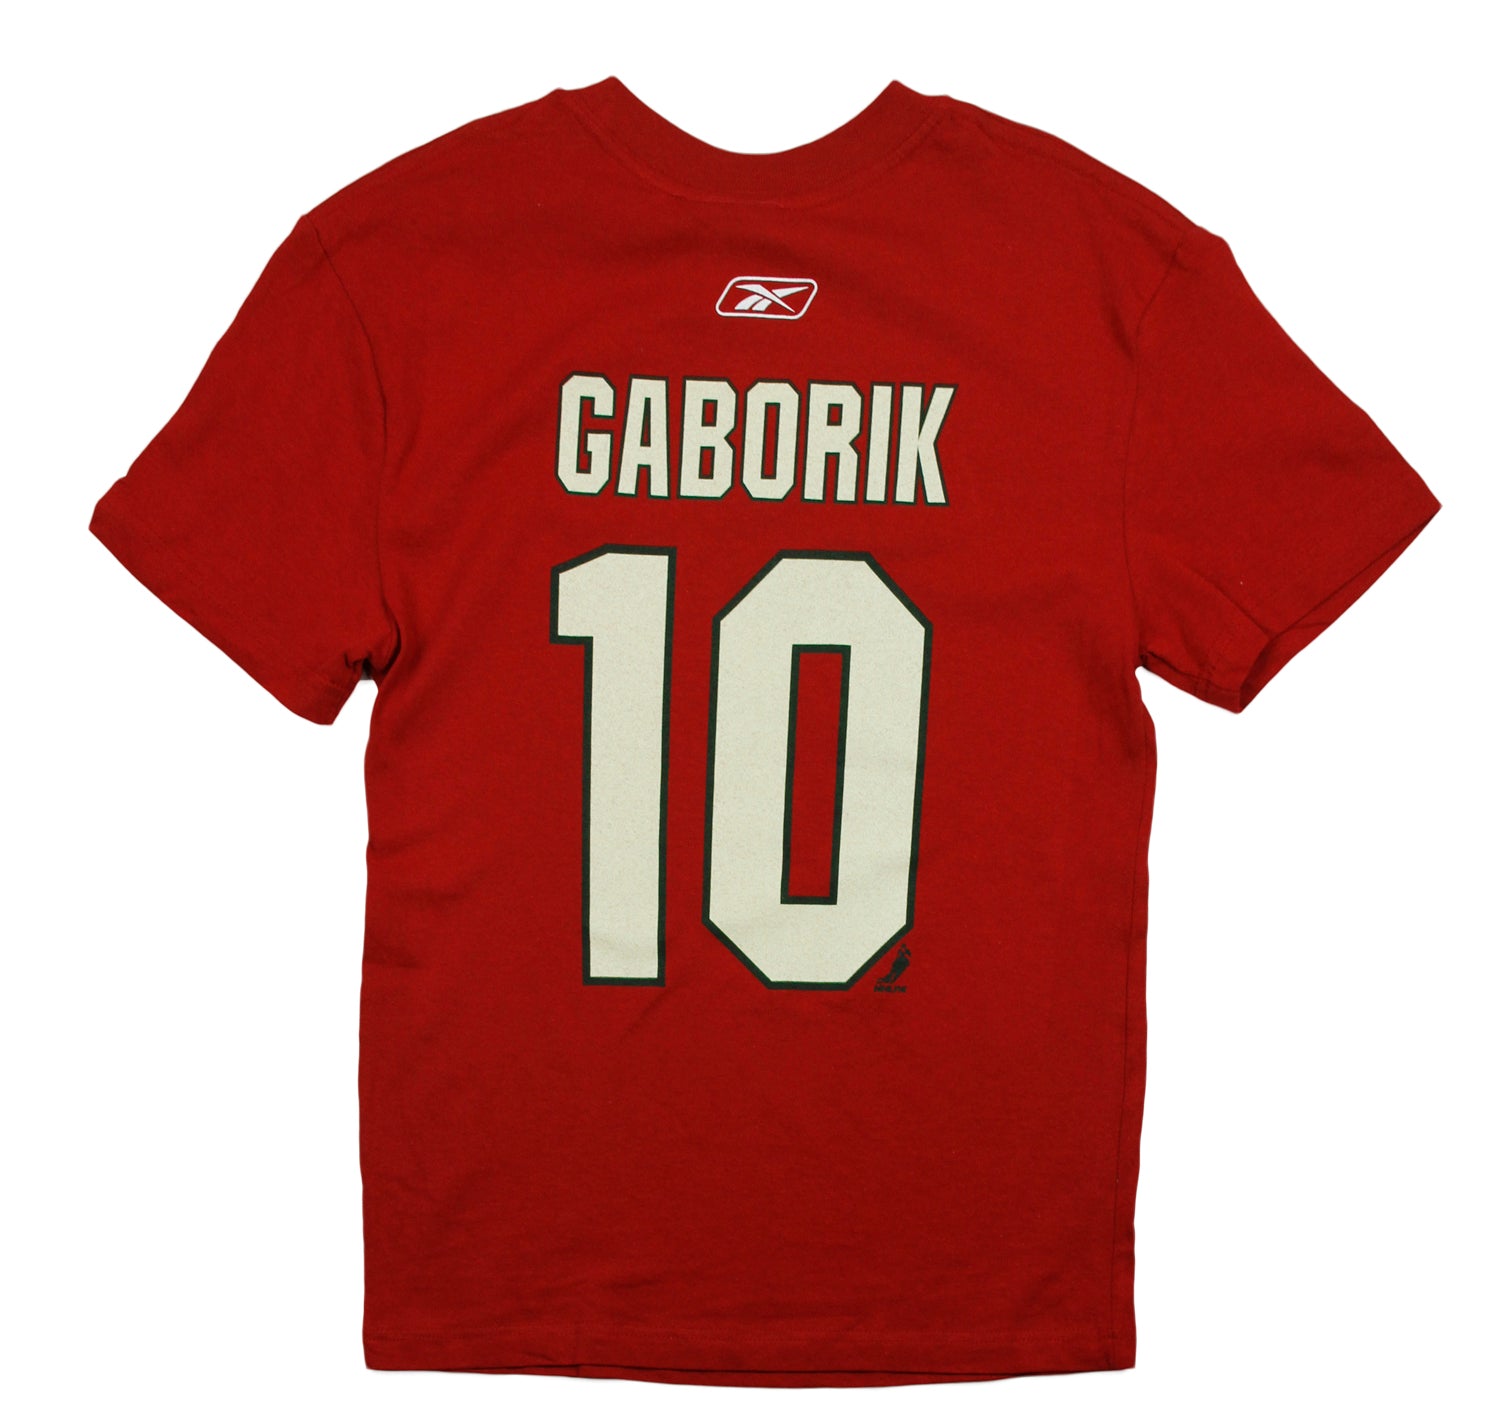 Marian Gaborik Signed Reebok New York Rangers Jersey Licensed